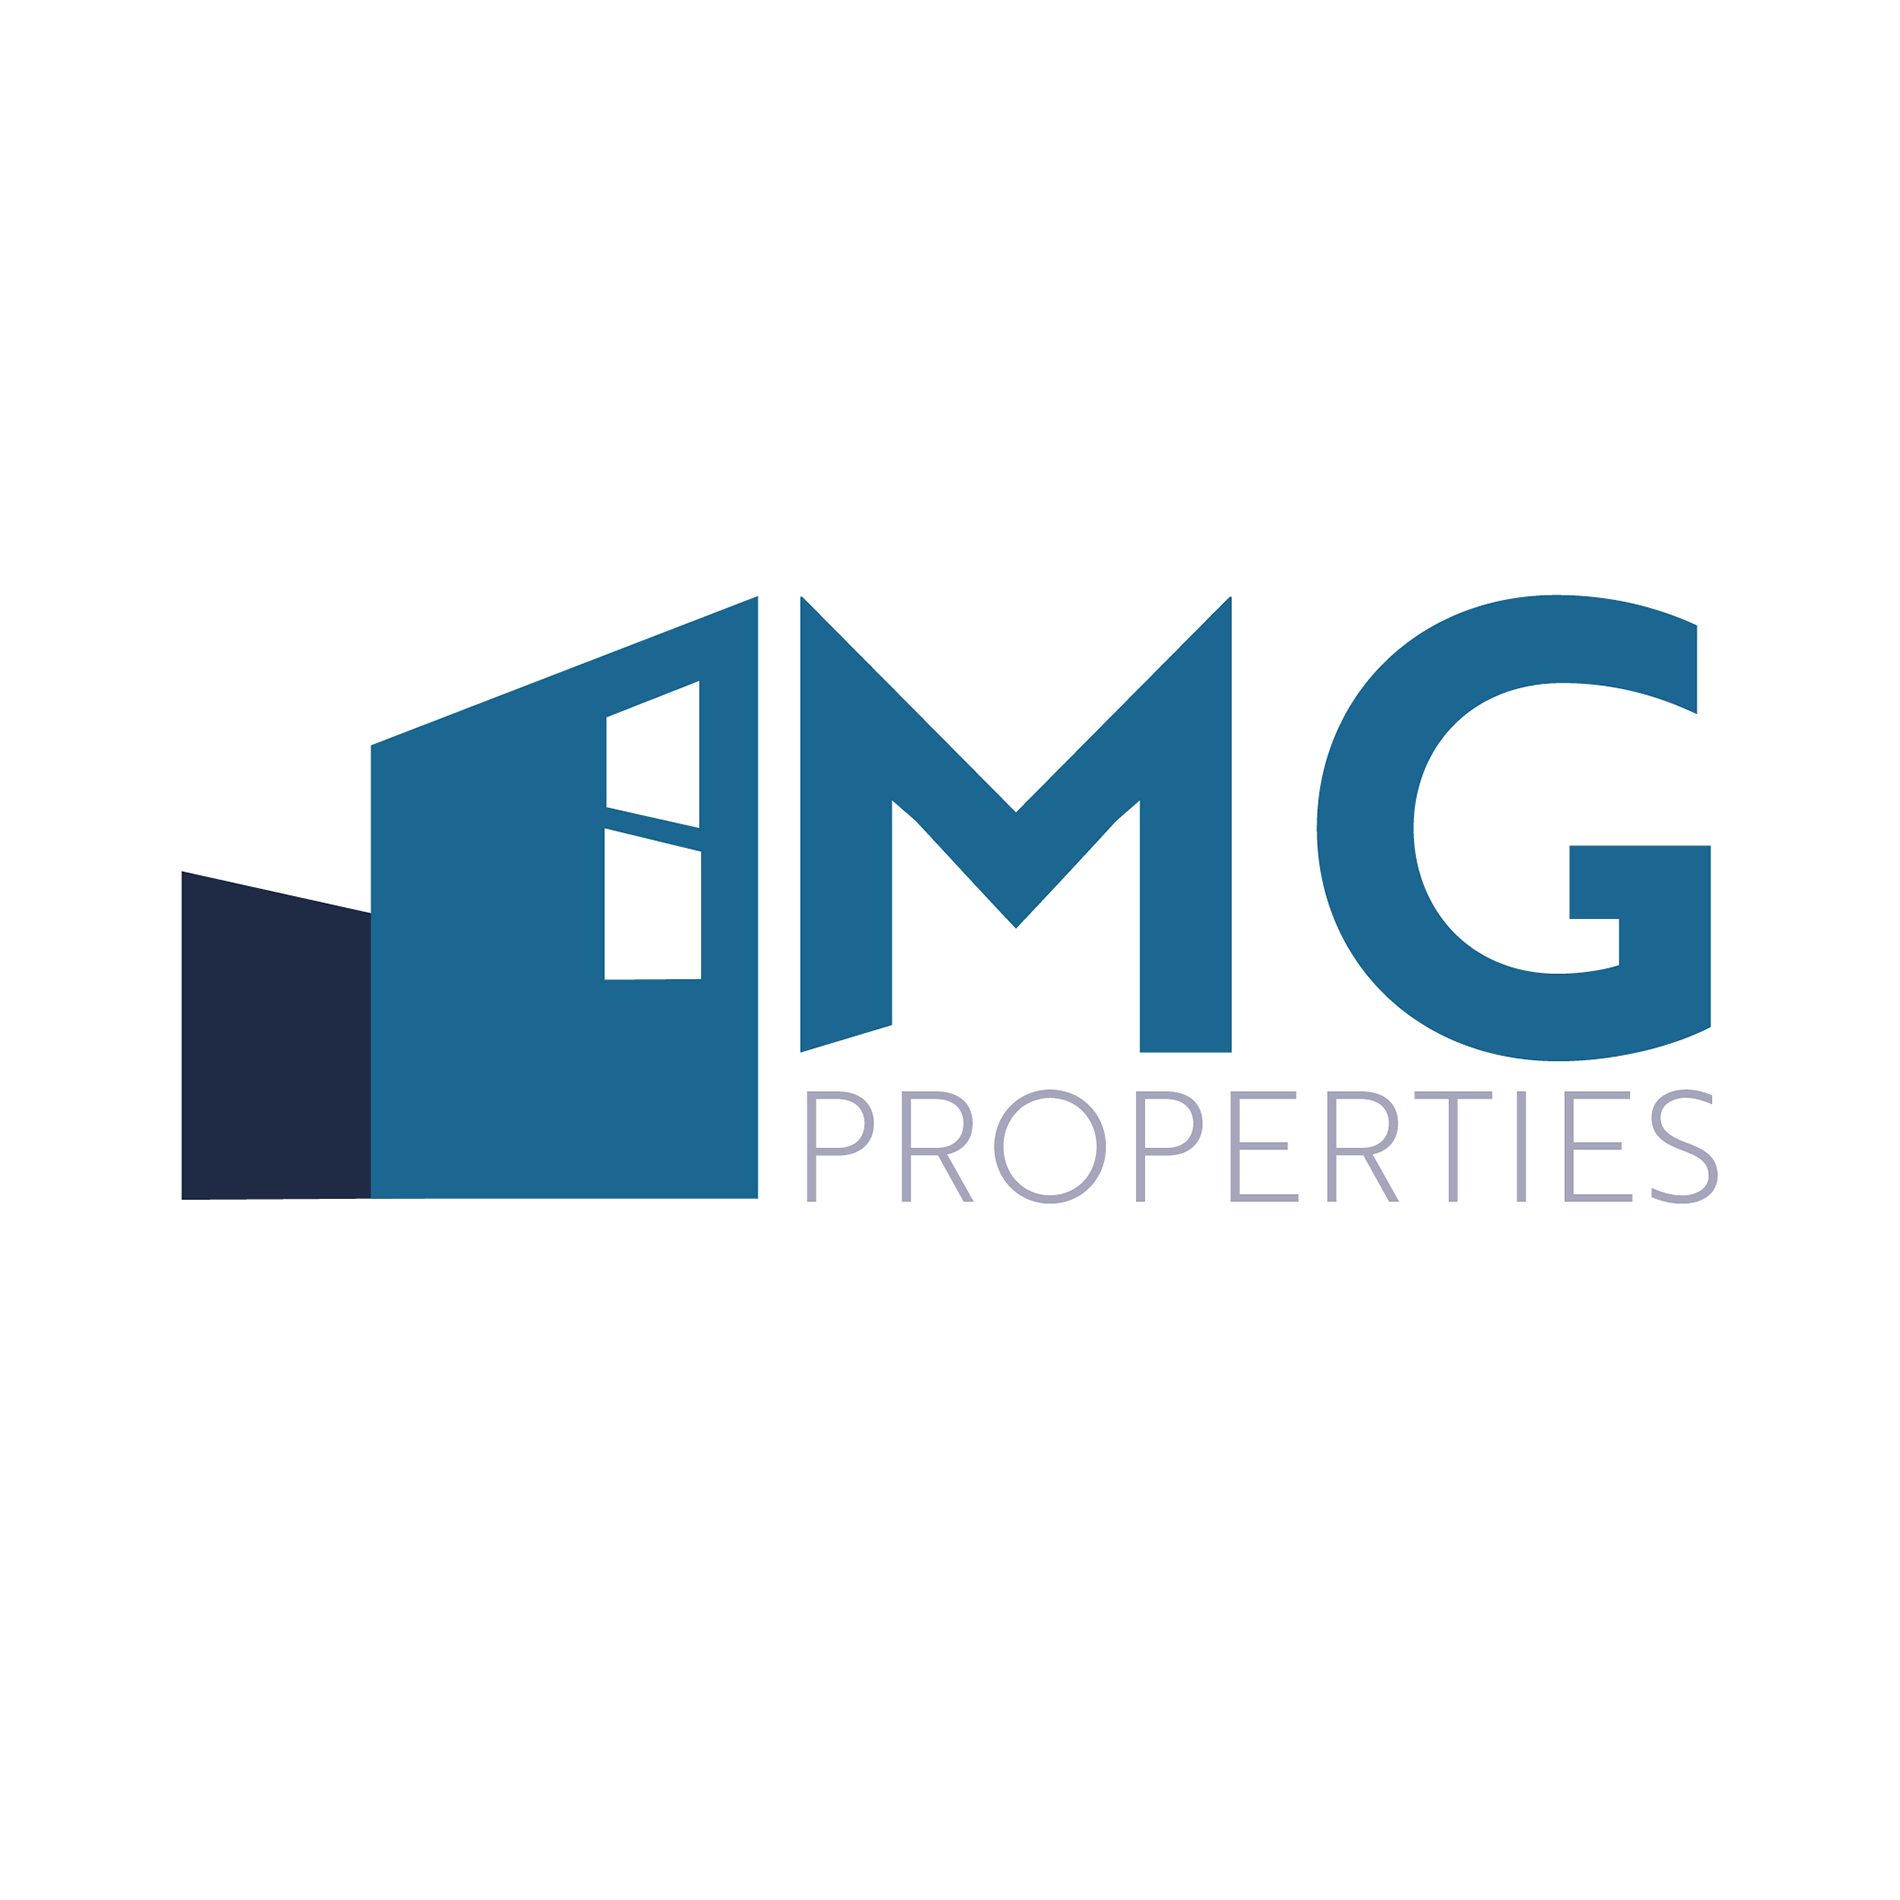 MG Properties Logo